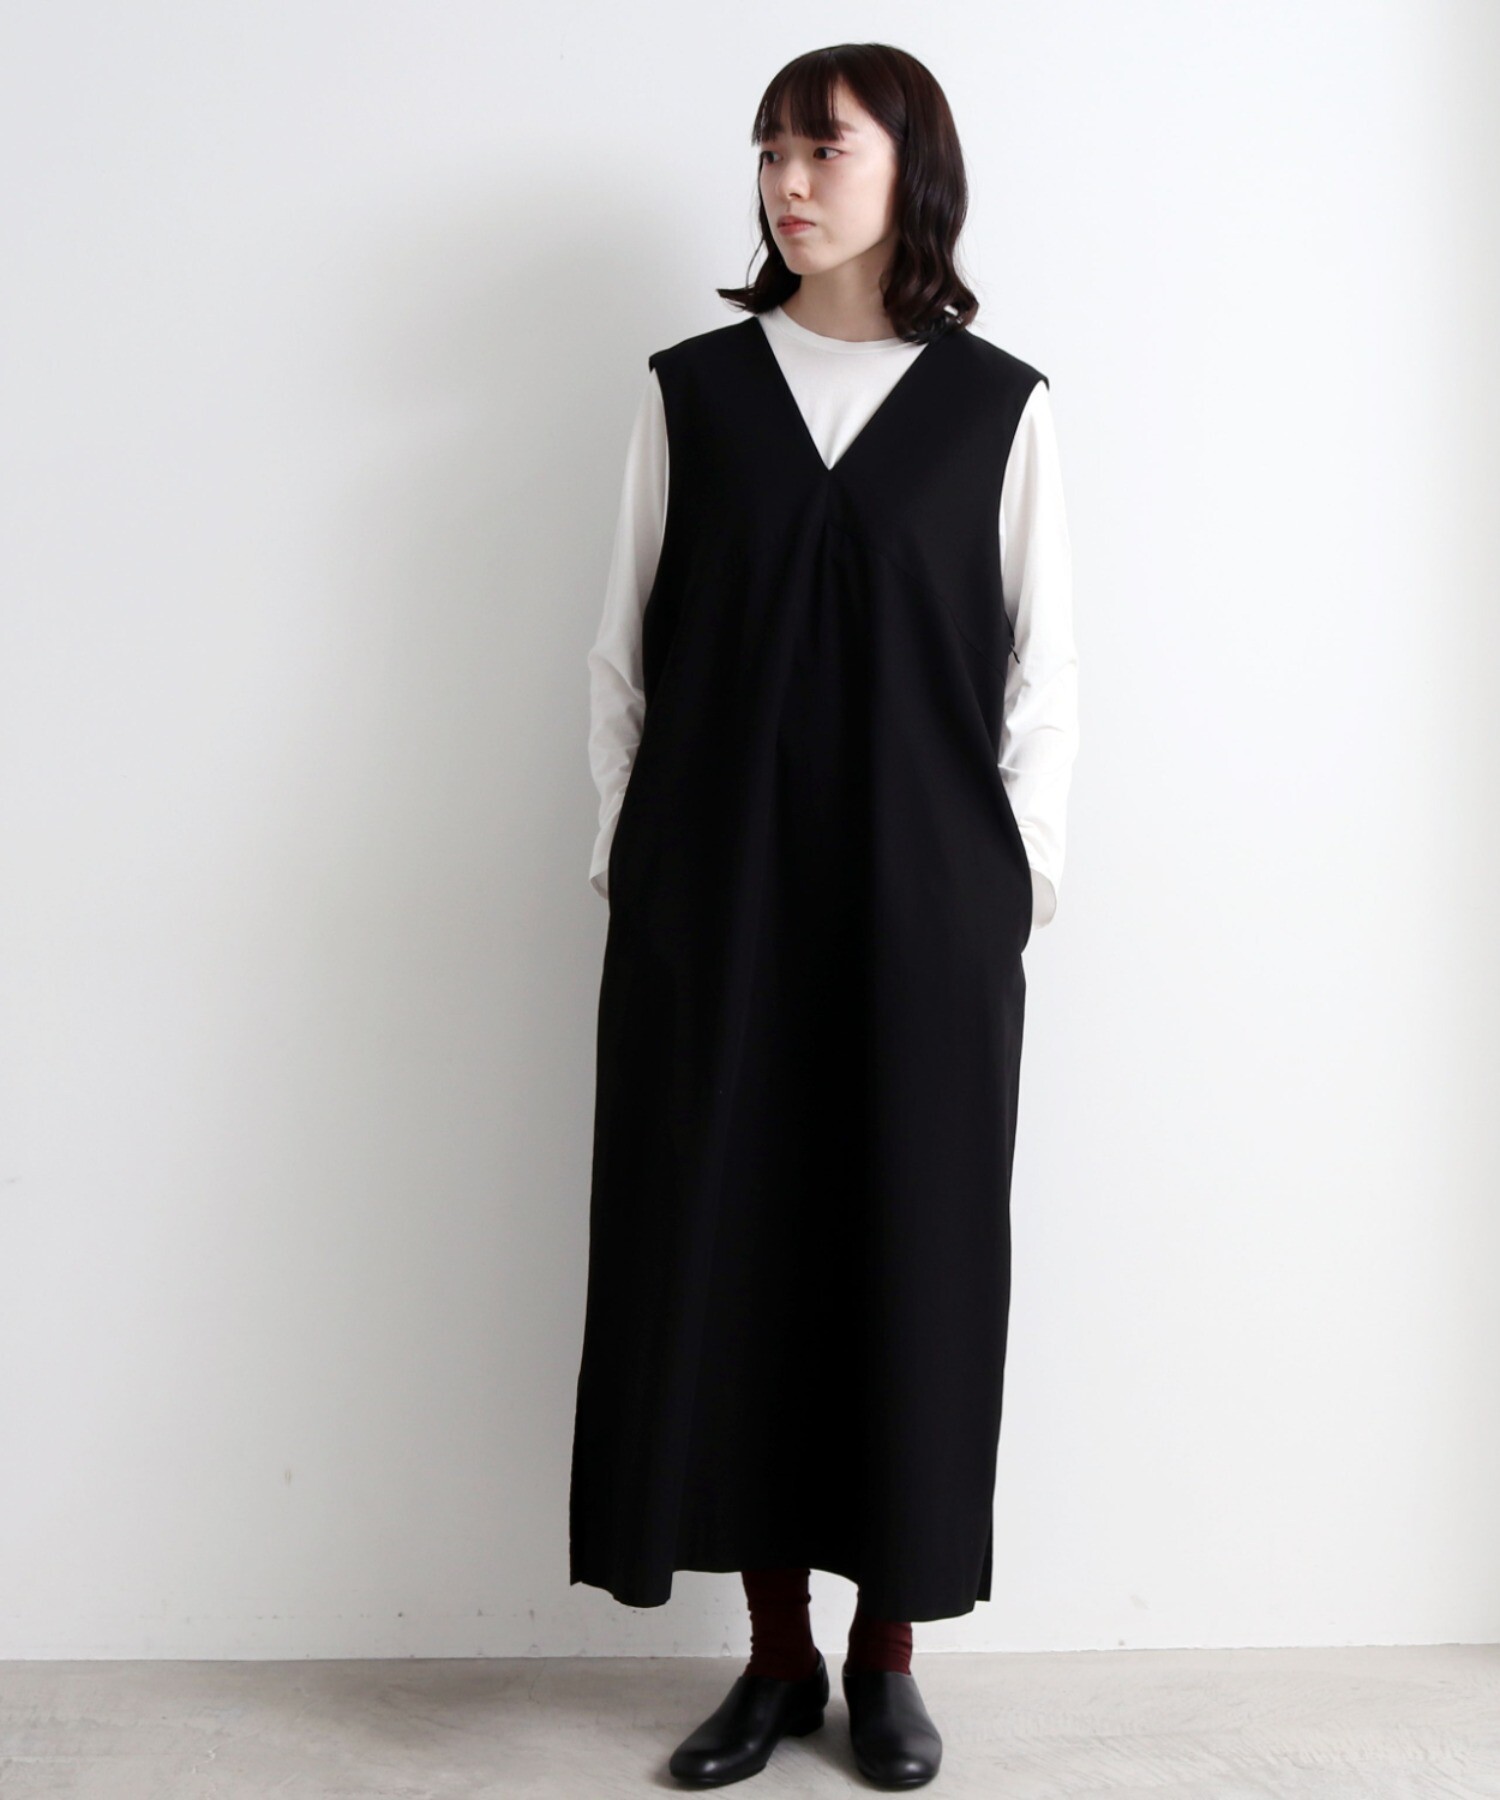 AMBIDEX Store 80/2強撚ギャバコットン jumper skirt(F ブラウン): yuni